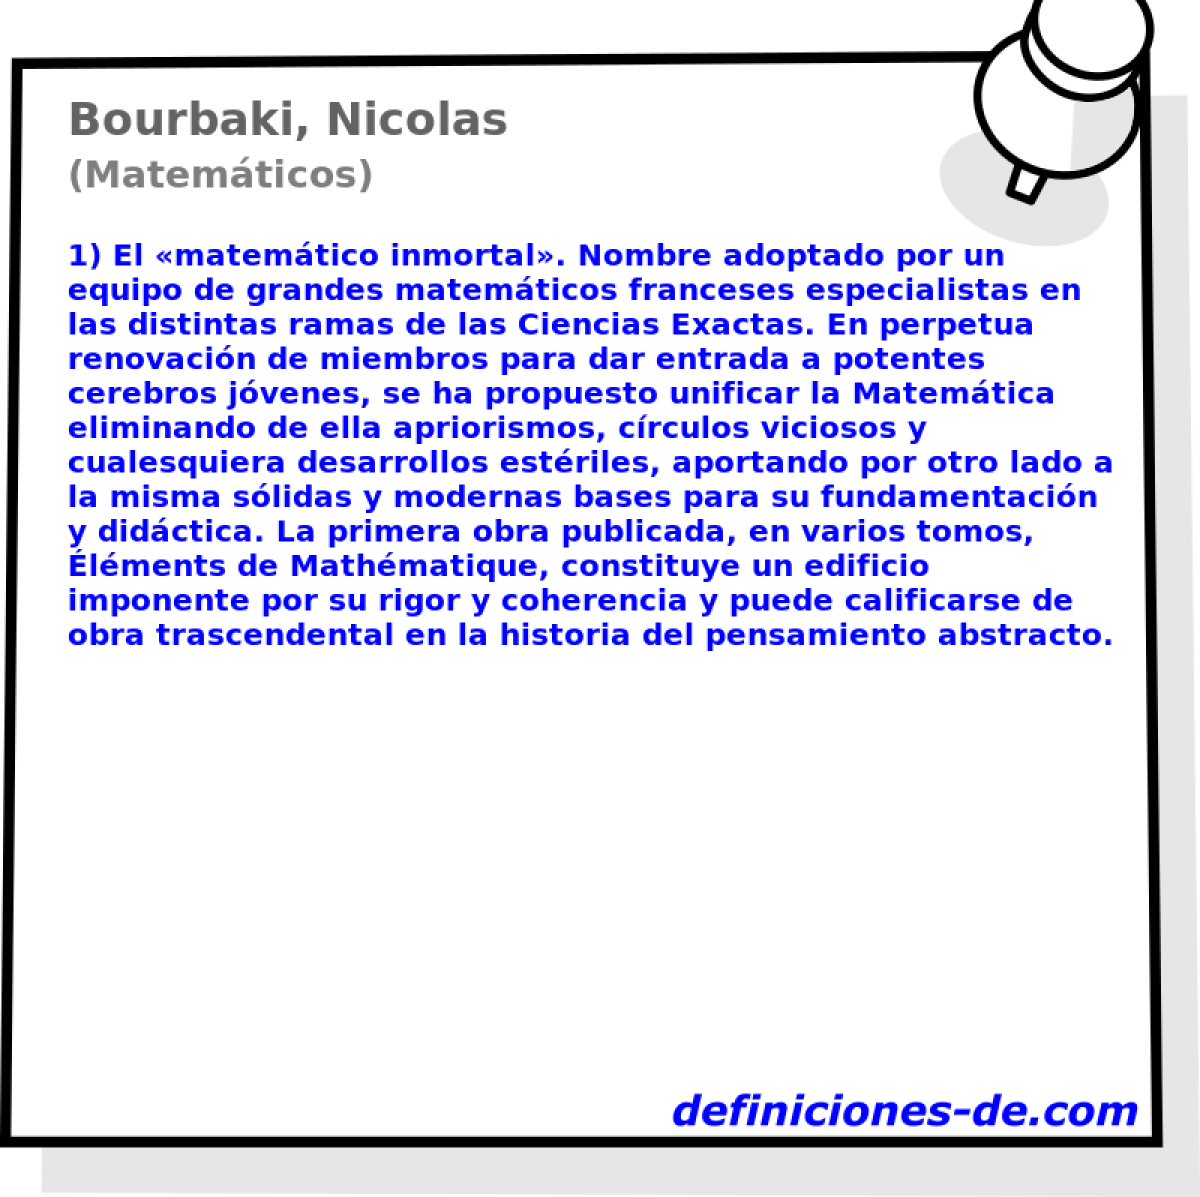 Bourbaki, Nicolas (Matemticos)